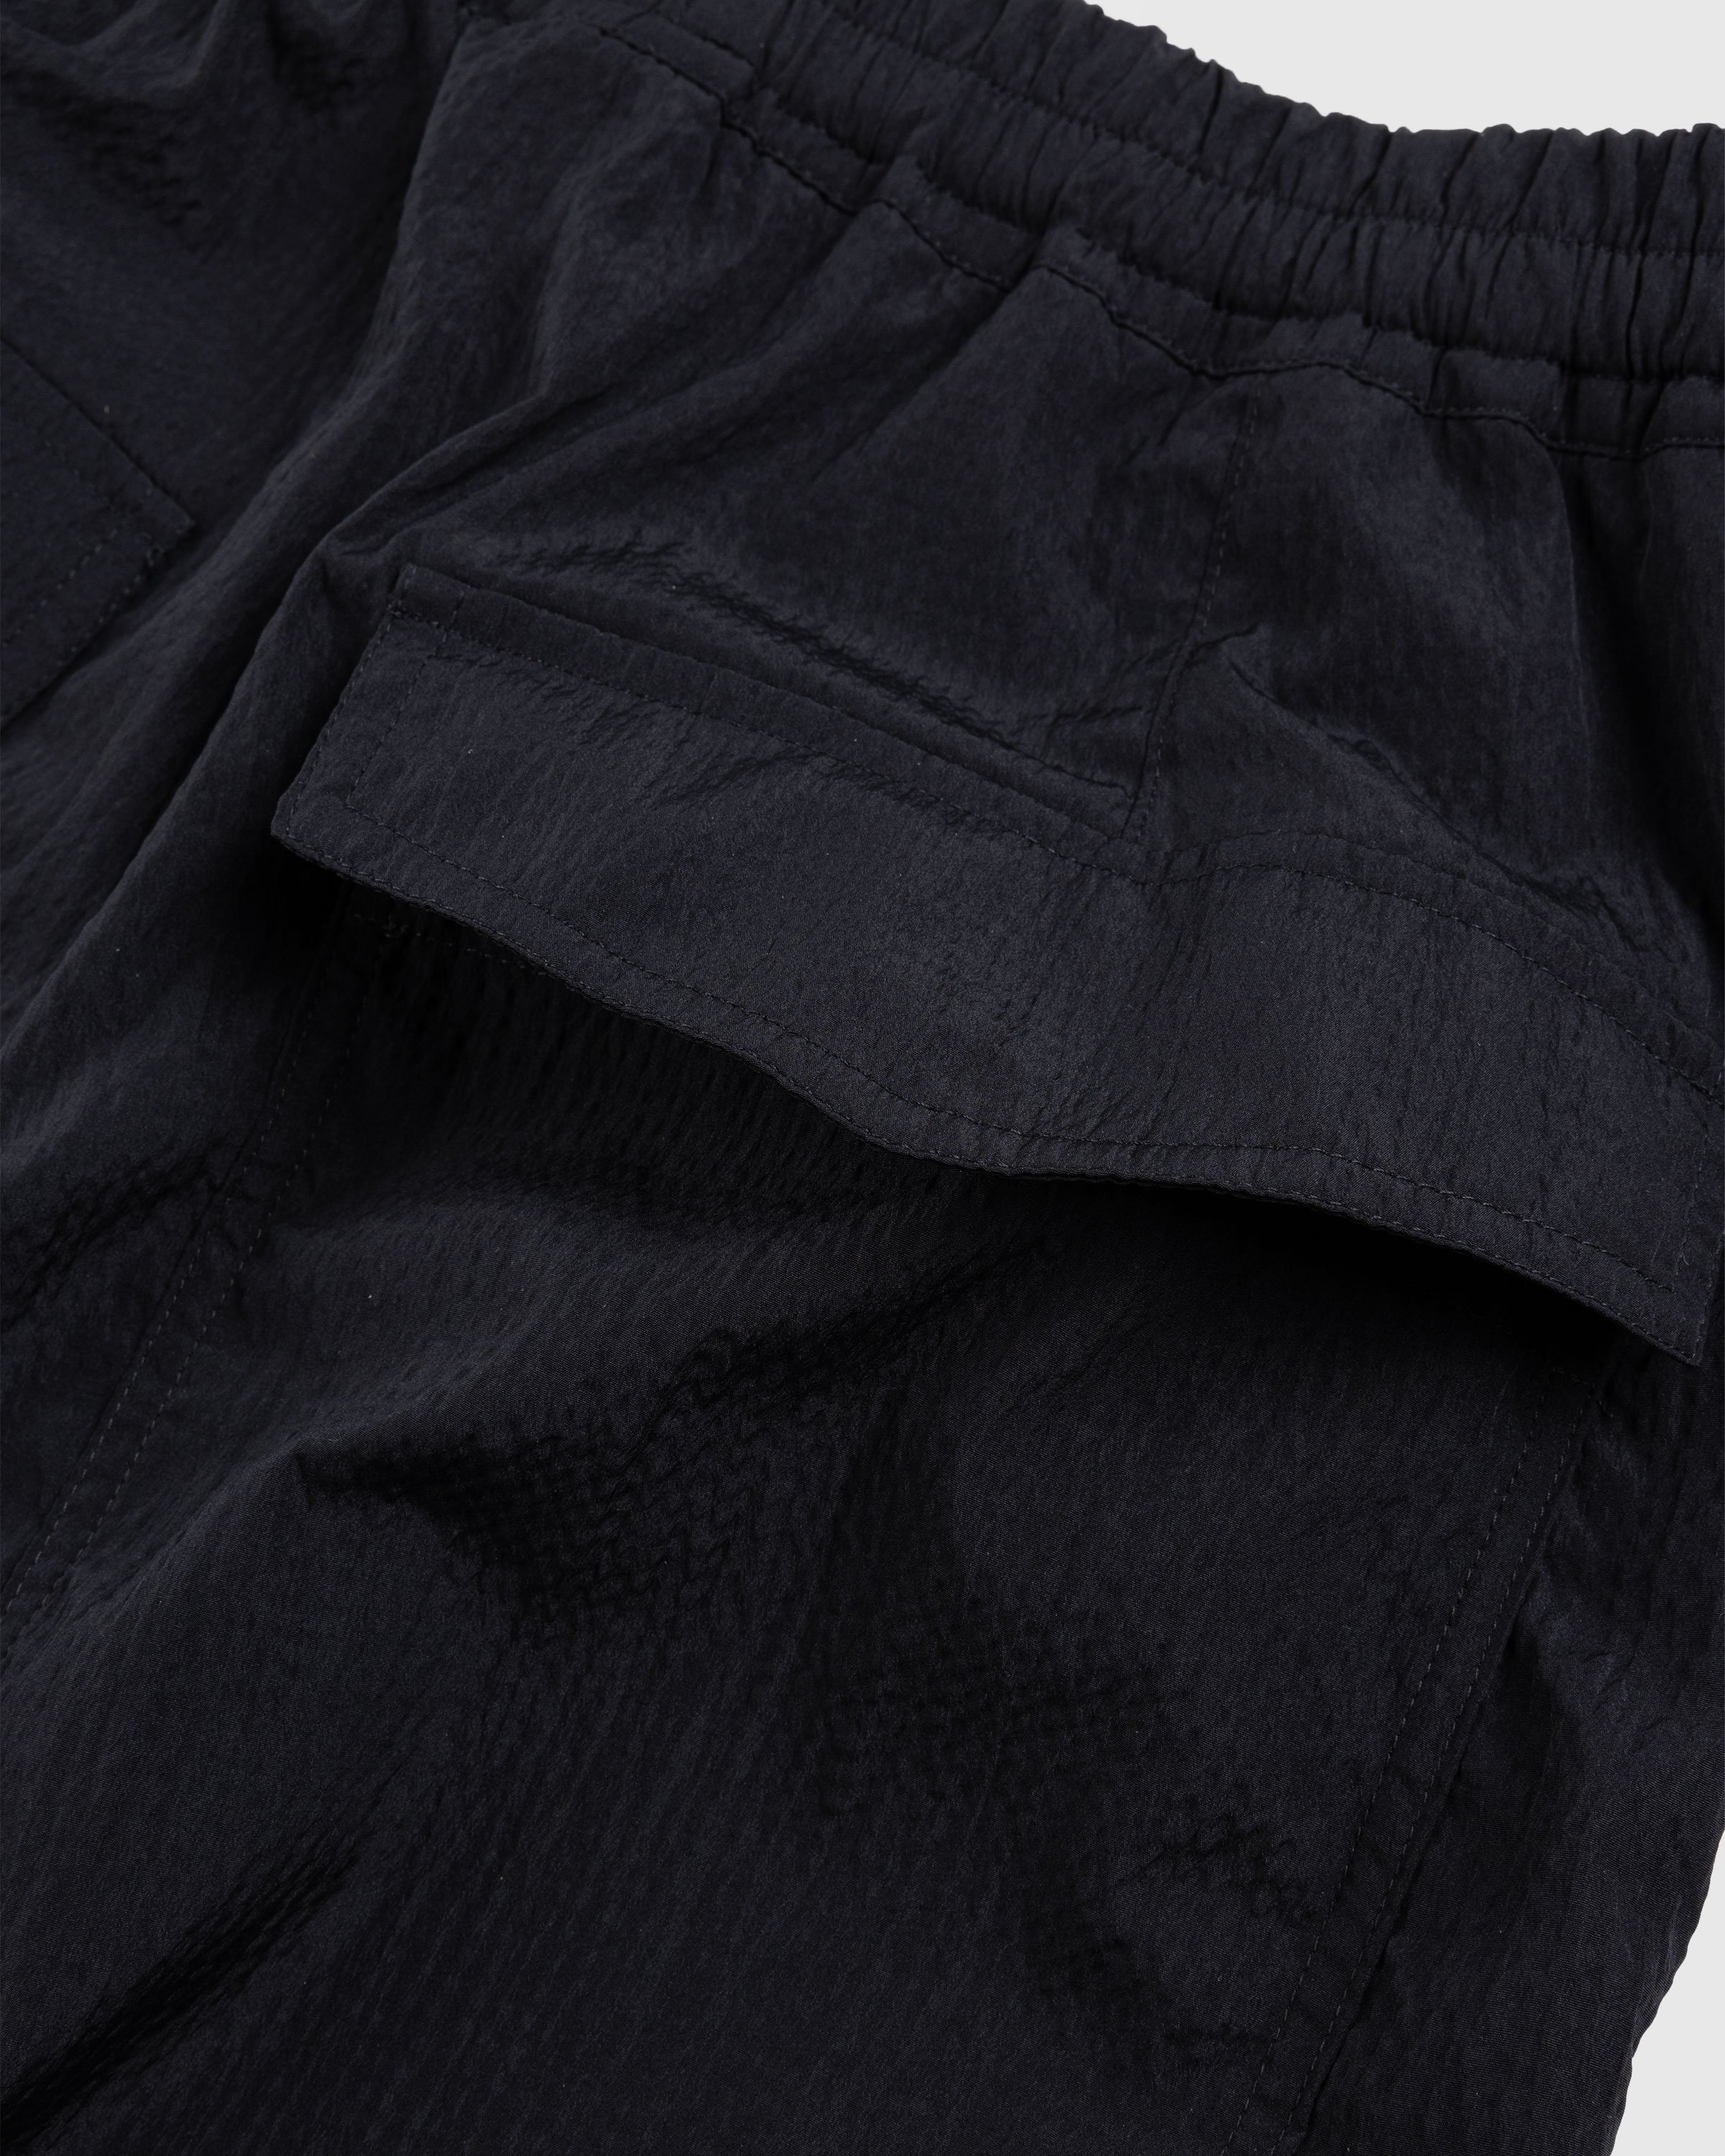 Dries van Noten - Portby Tris Pants Black - Clothing - Black - Image 6